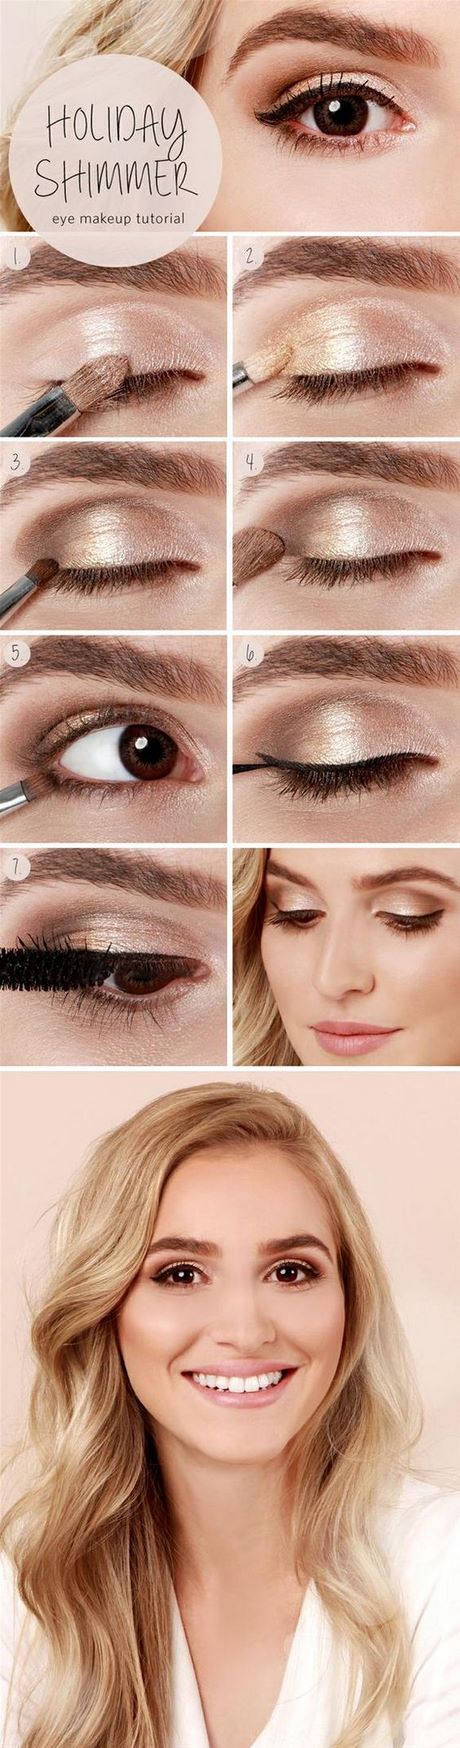 binky-makeup-tutorial-dailymotion-08_9 Binky make-up tutorial dailymotion